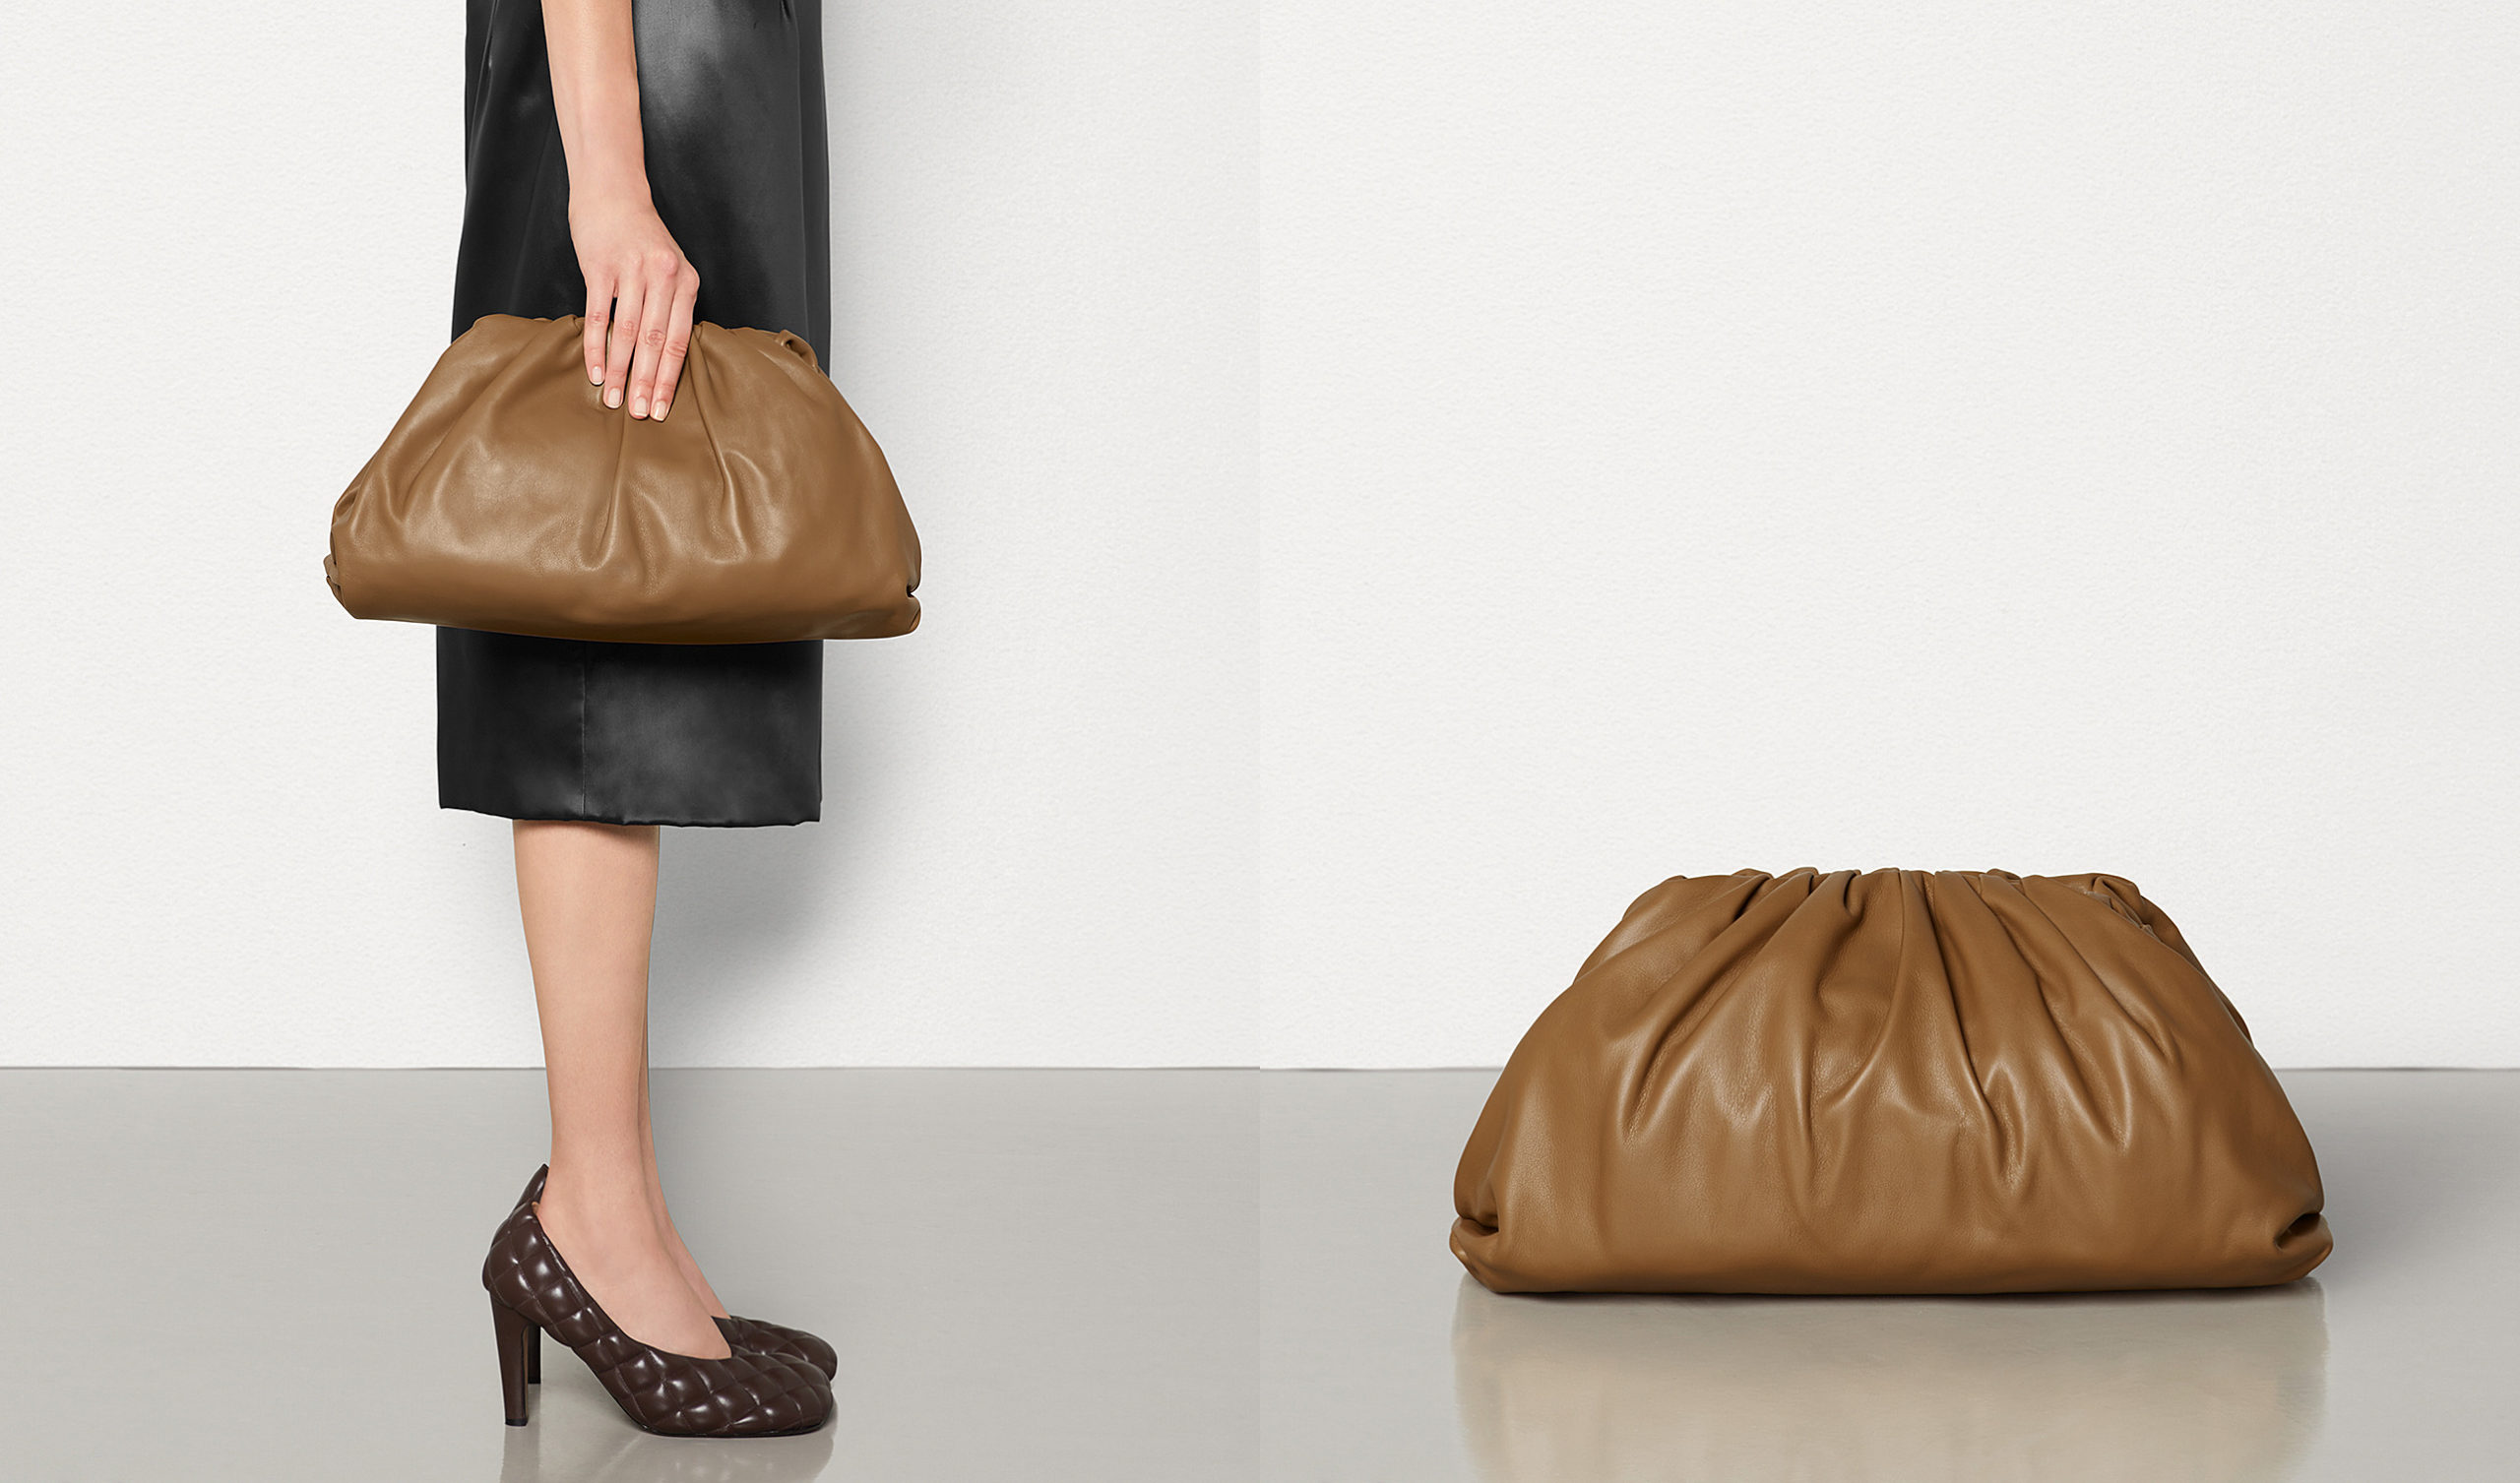 The iconic Botttega Veneta pouch in soft calfskin leather in Camello color